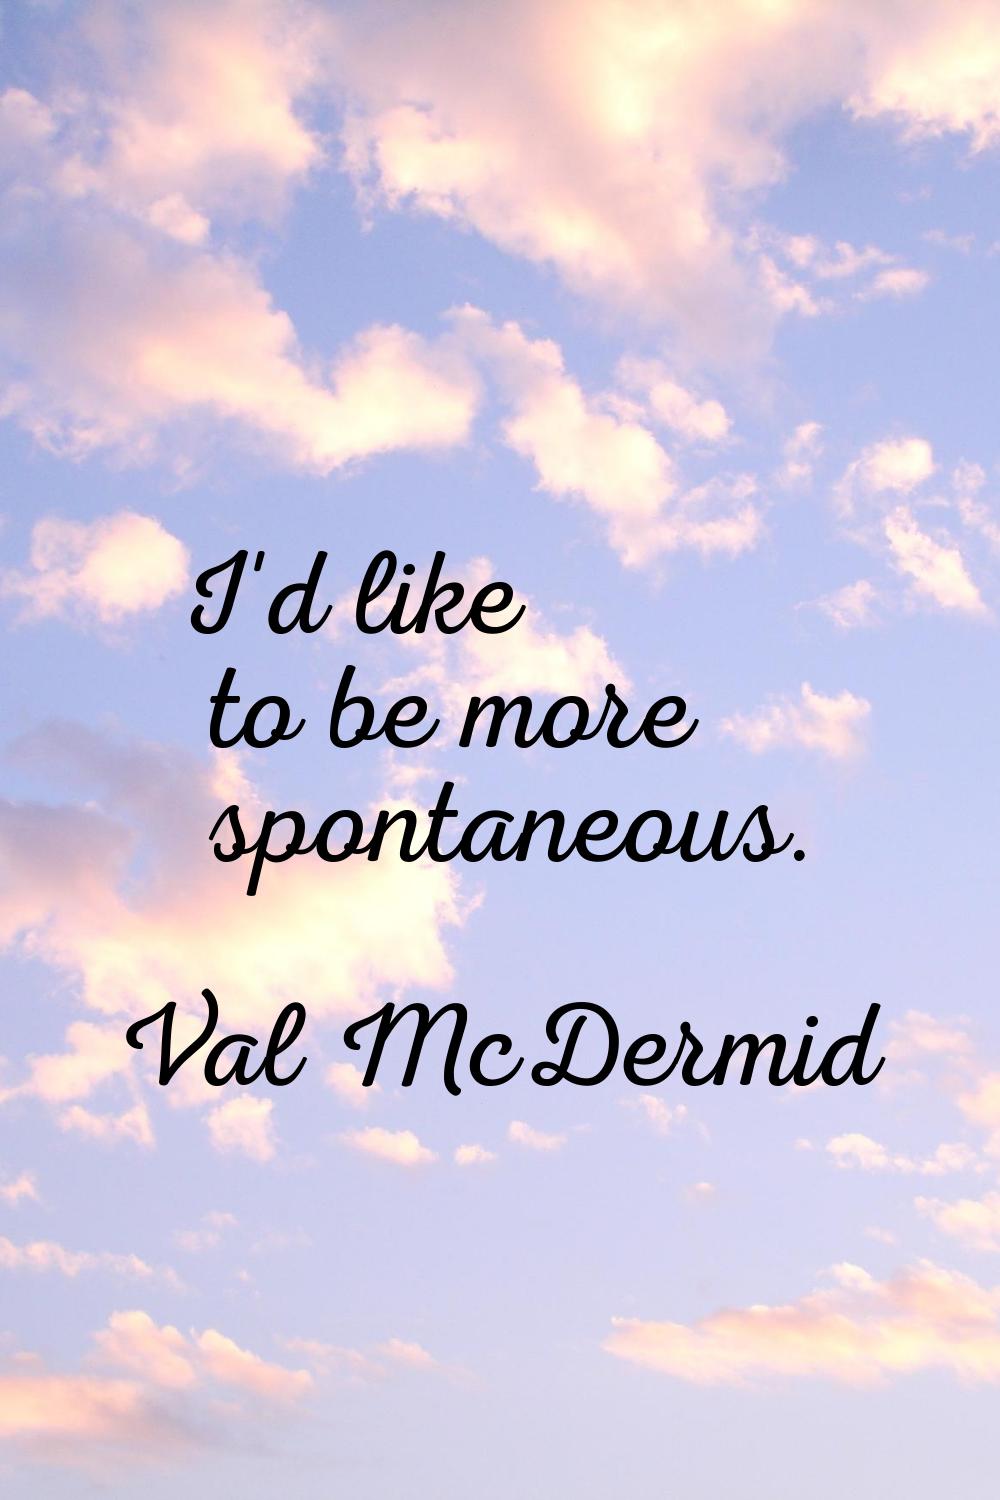 I'd like to be more spontaneous.